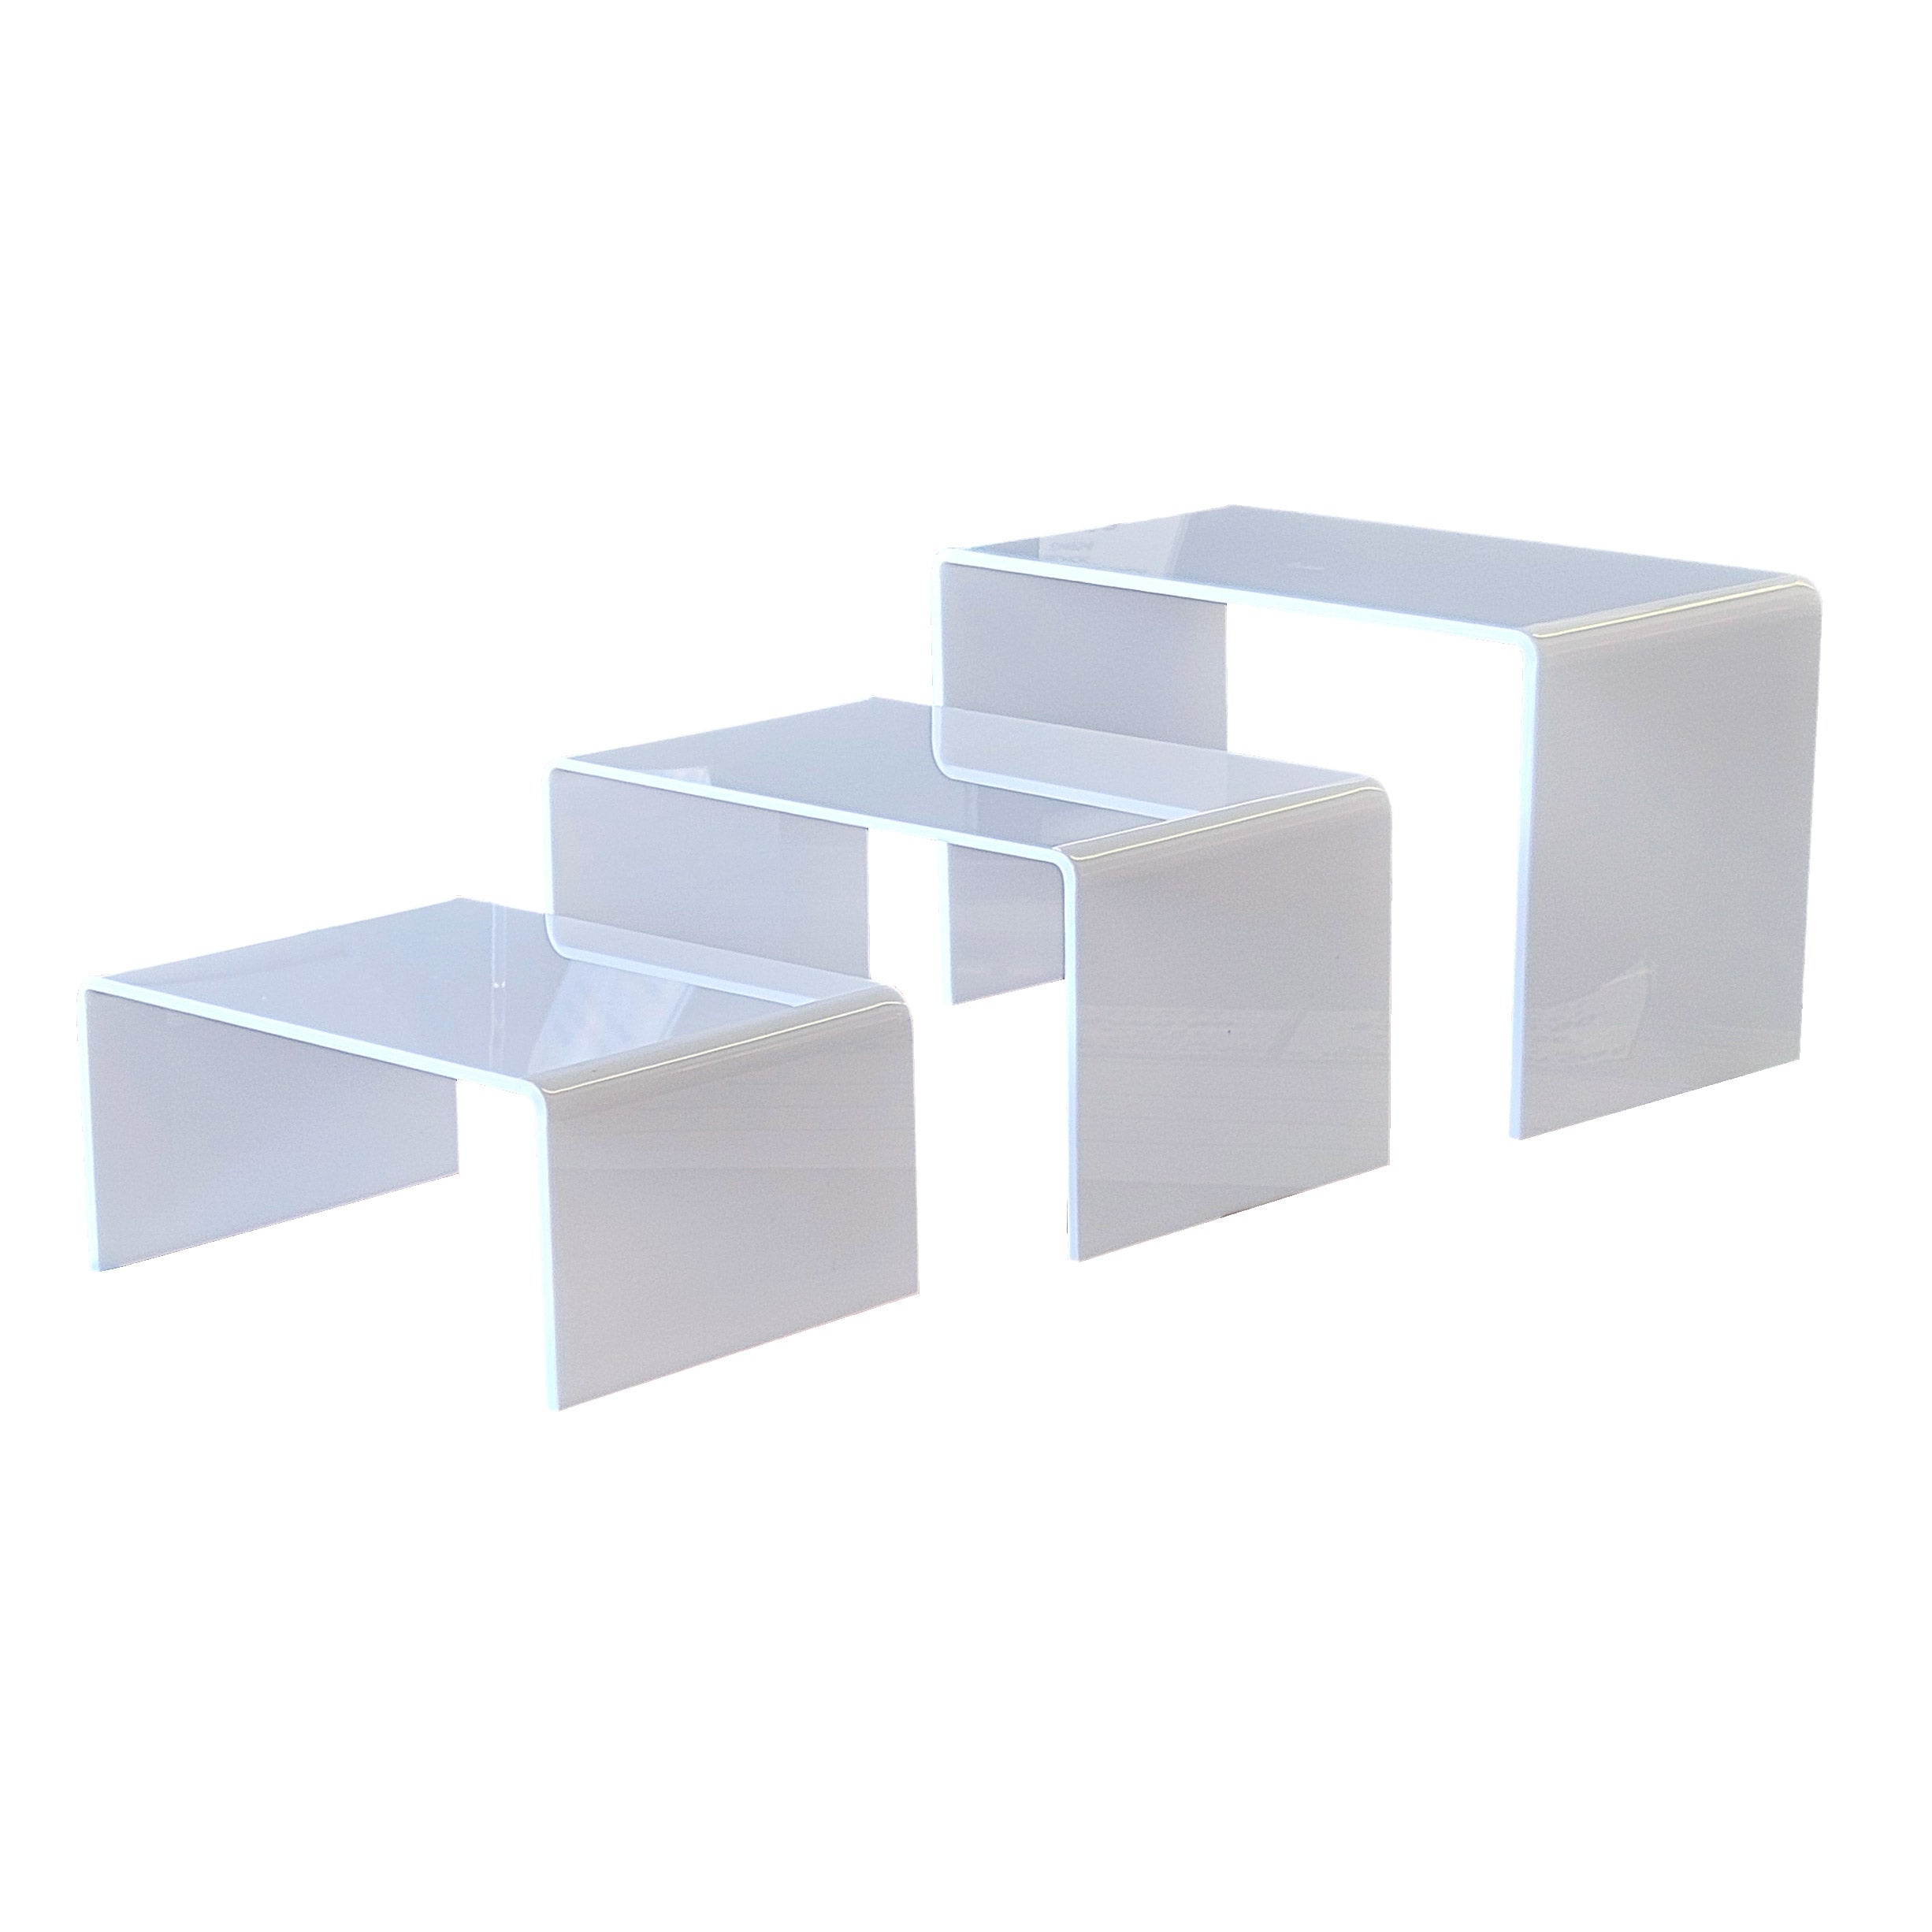 Medium Rectangular Risers | Set of 3 | White Acrylic - Eddie's Hang-Up Display Ltd.